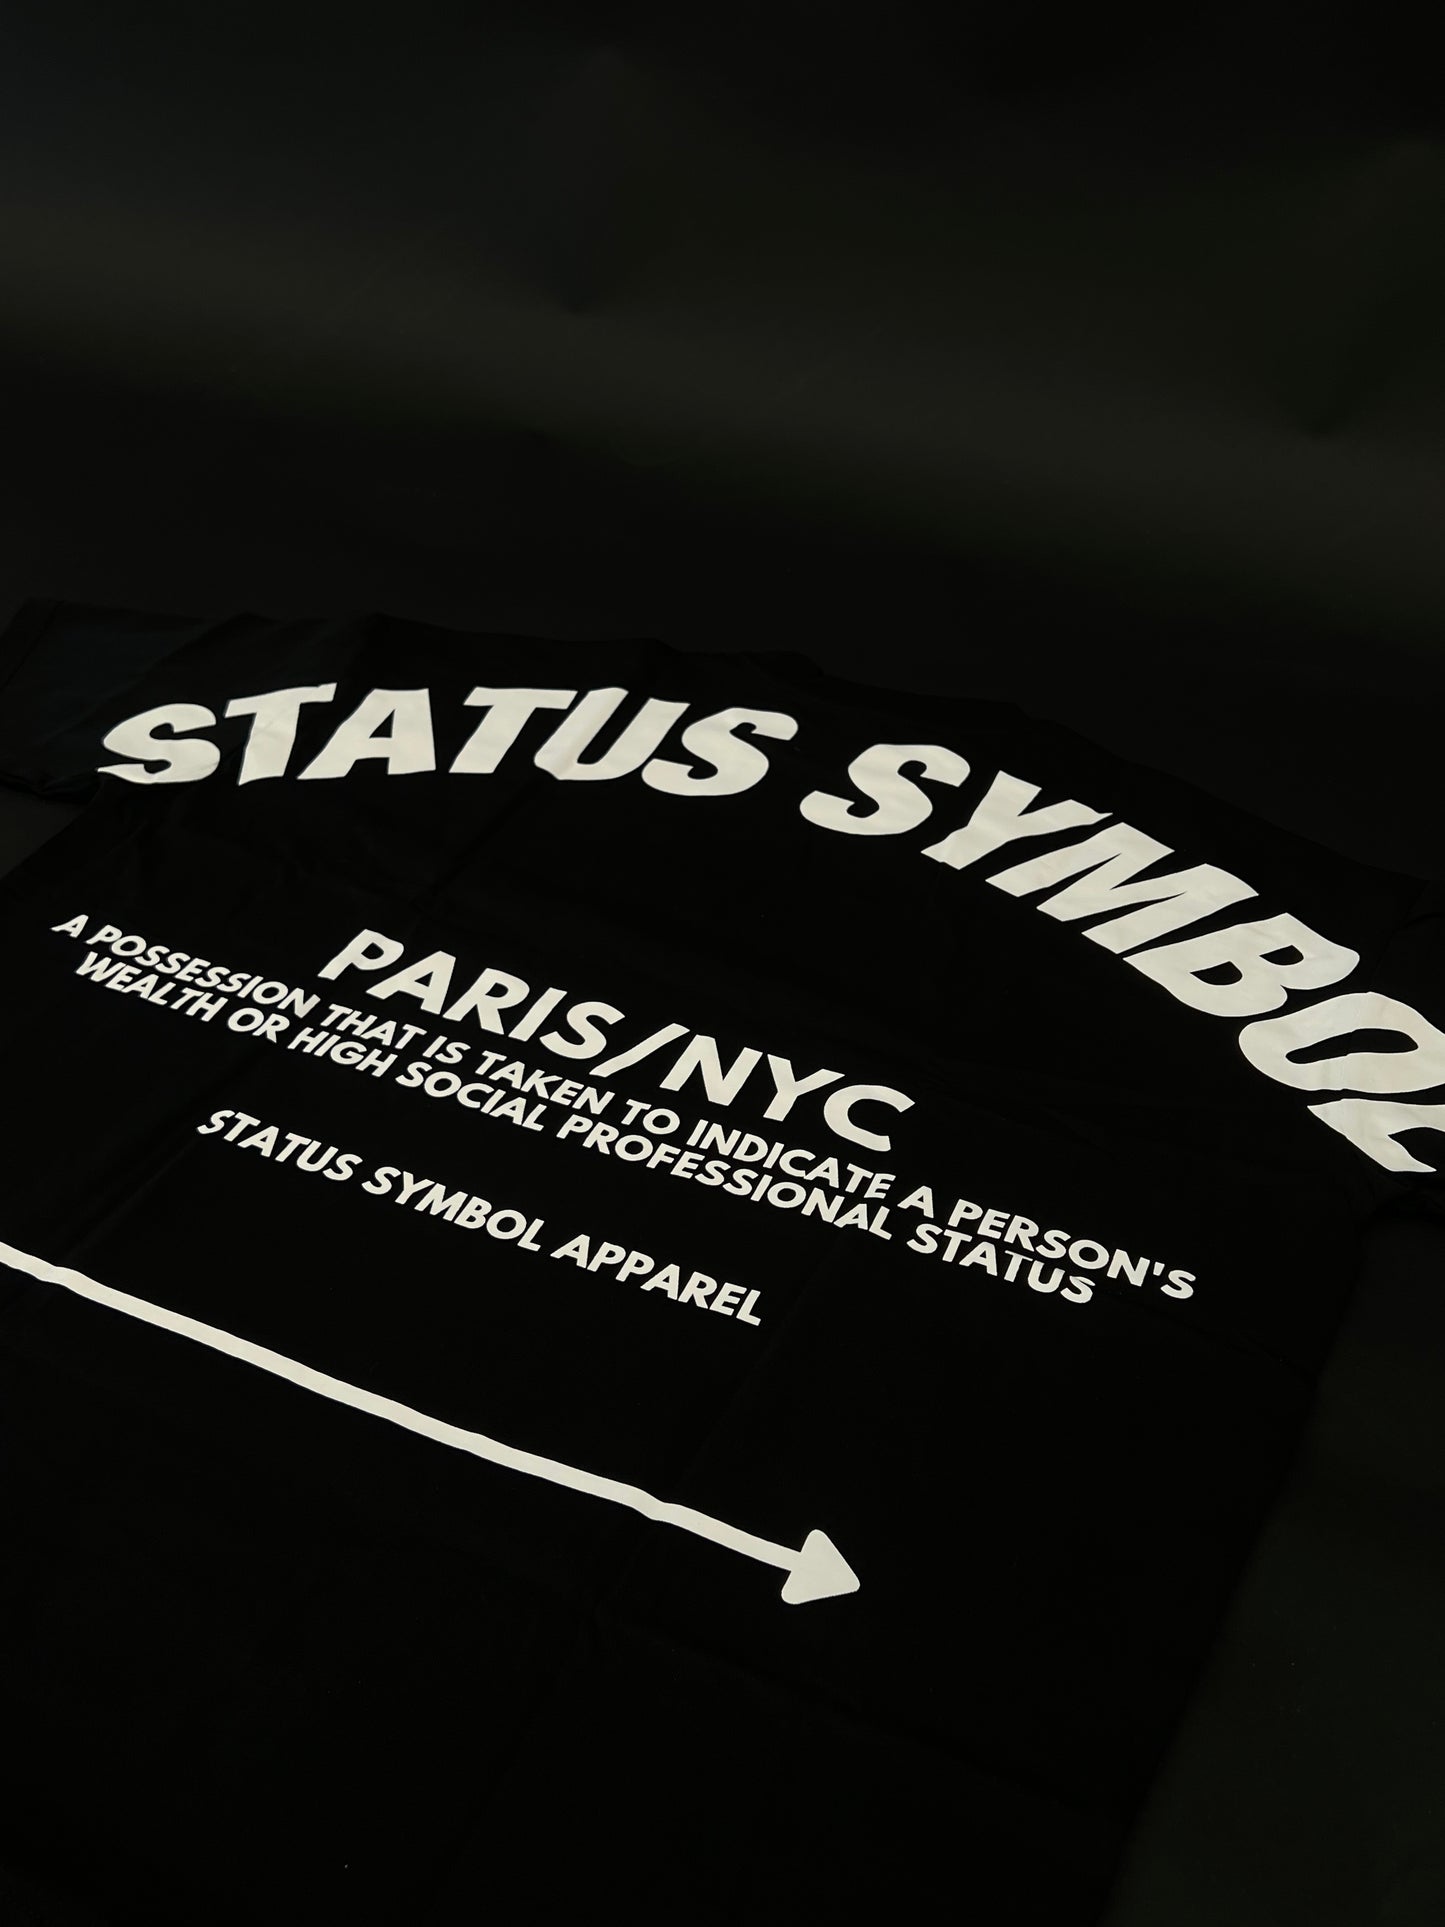 Black Status Symbol Logo T-Shirt